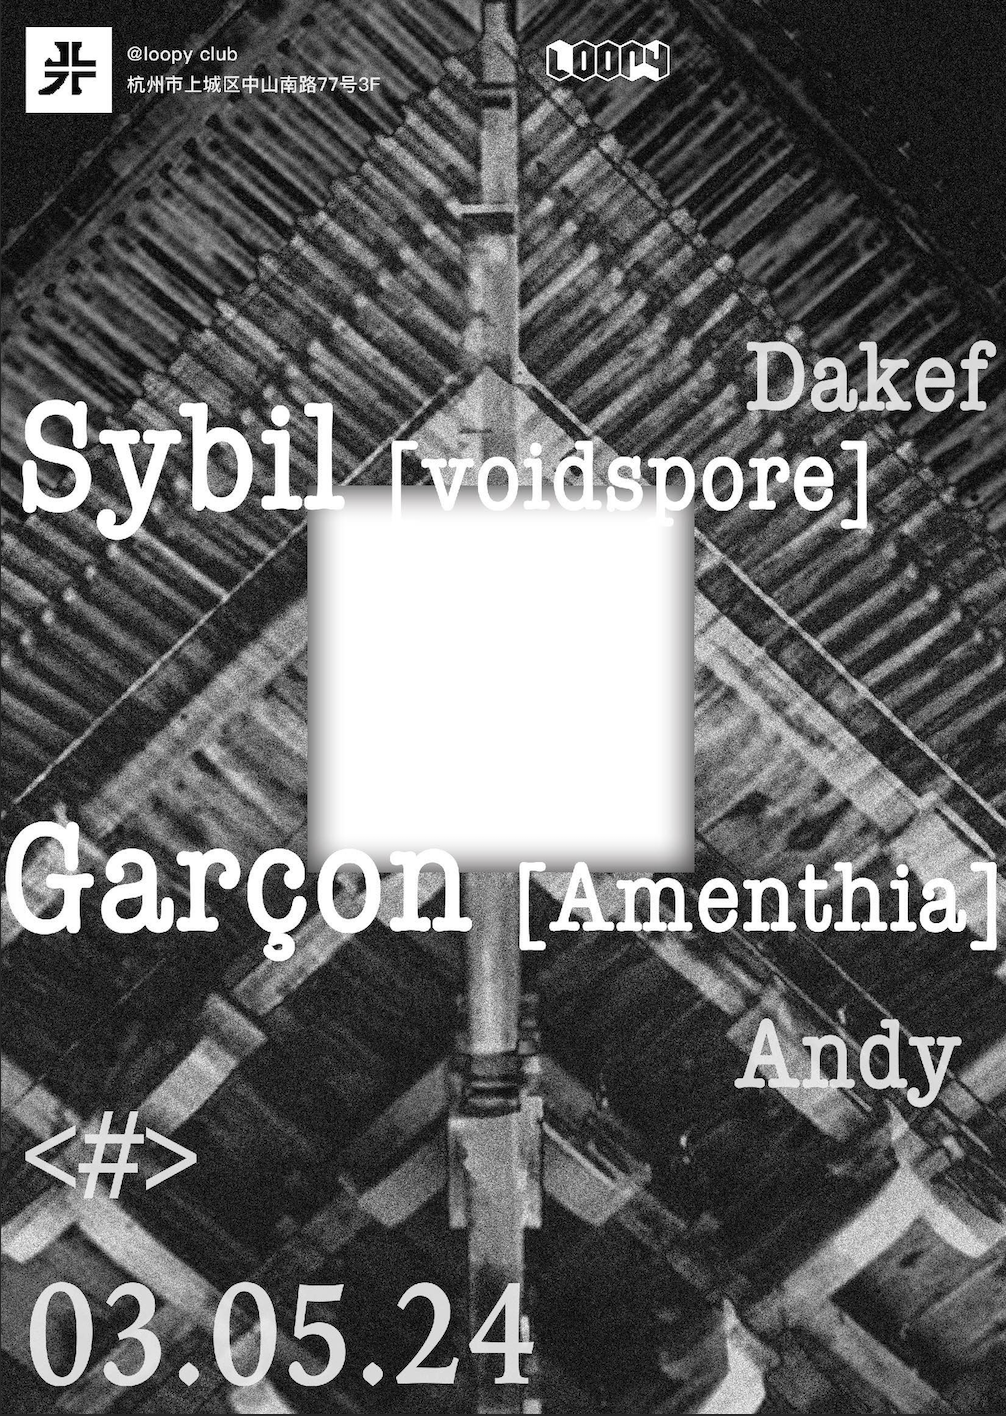 # with Garçon [Amenthia] & Sybil [voidspore] - Página frontal